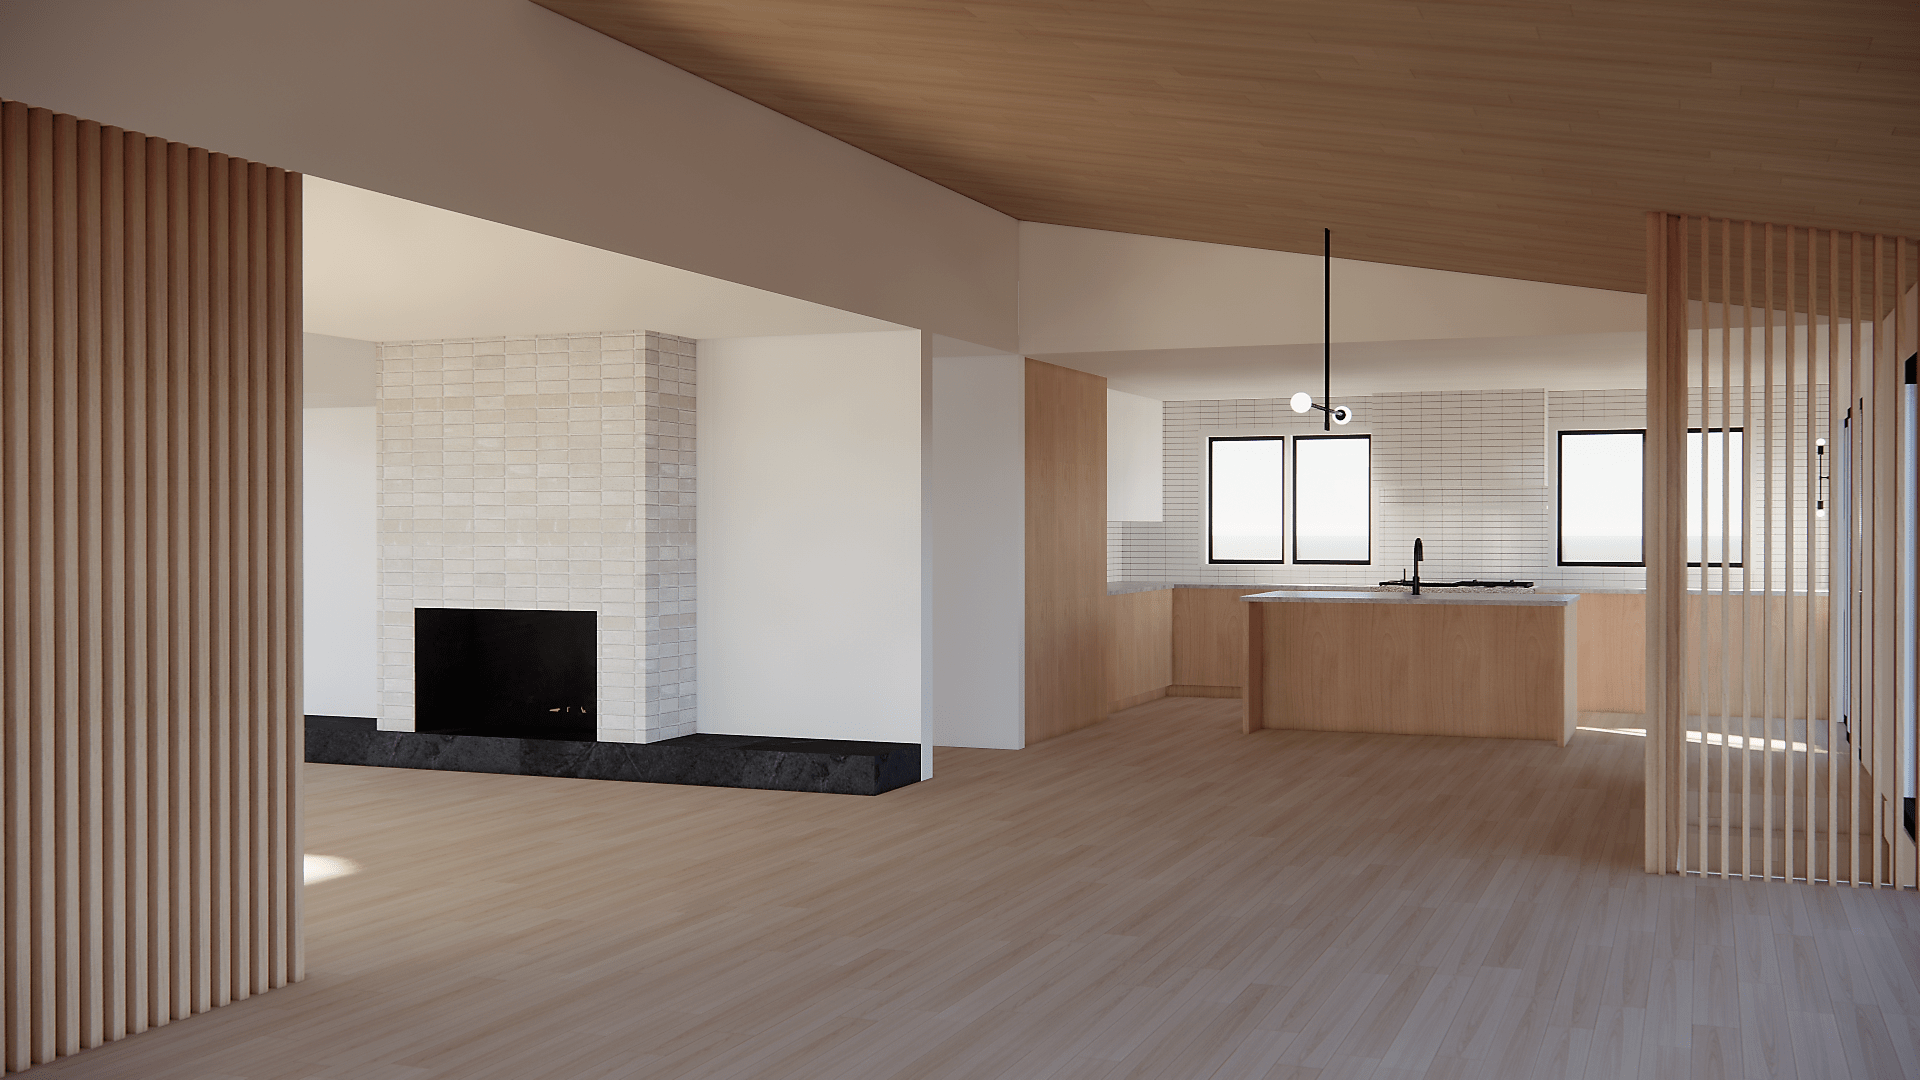 Modern residential interior design kitchen with island, white oak vertical slats